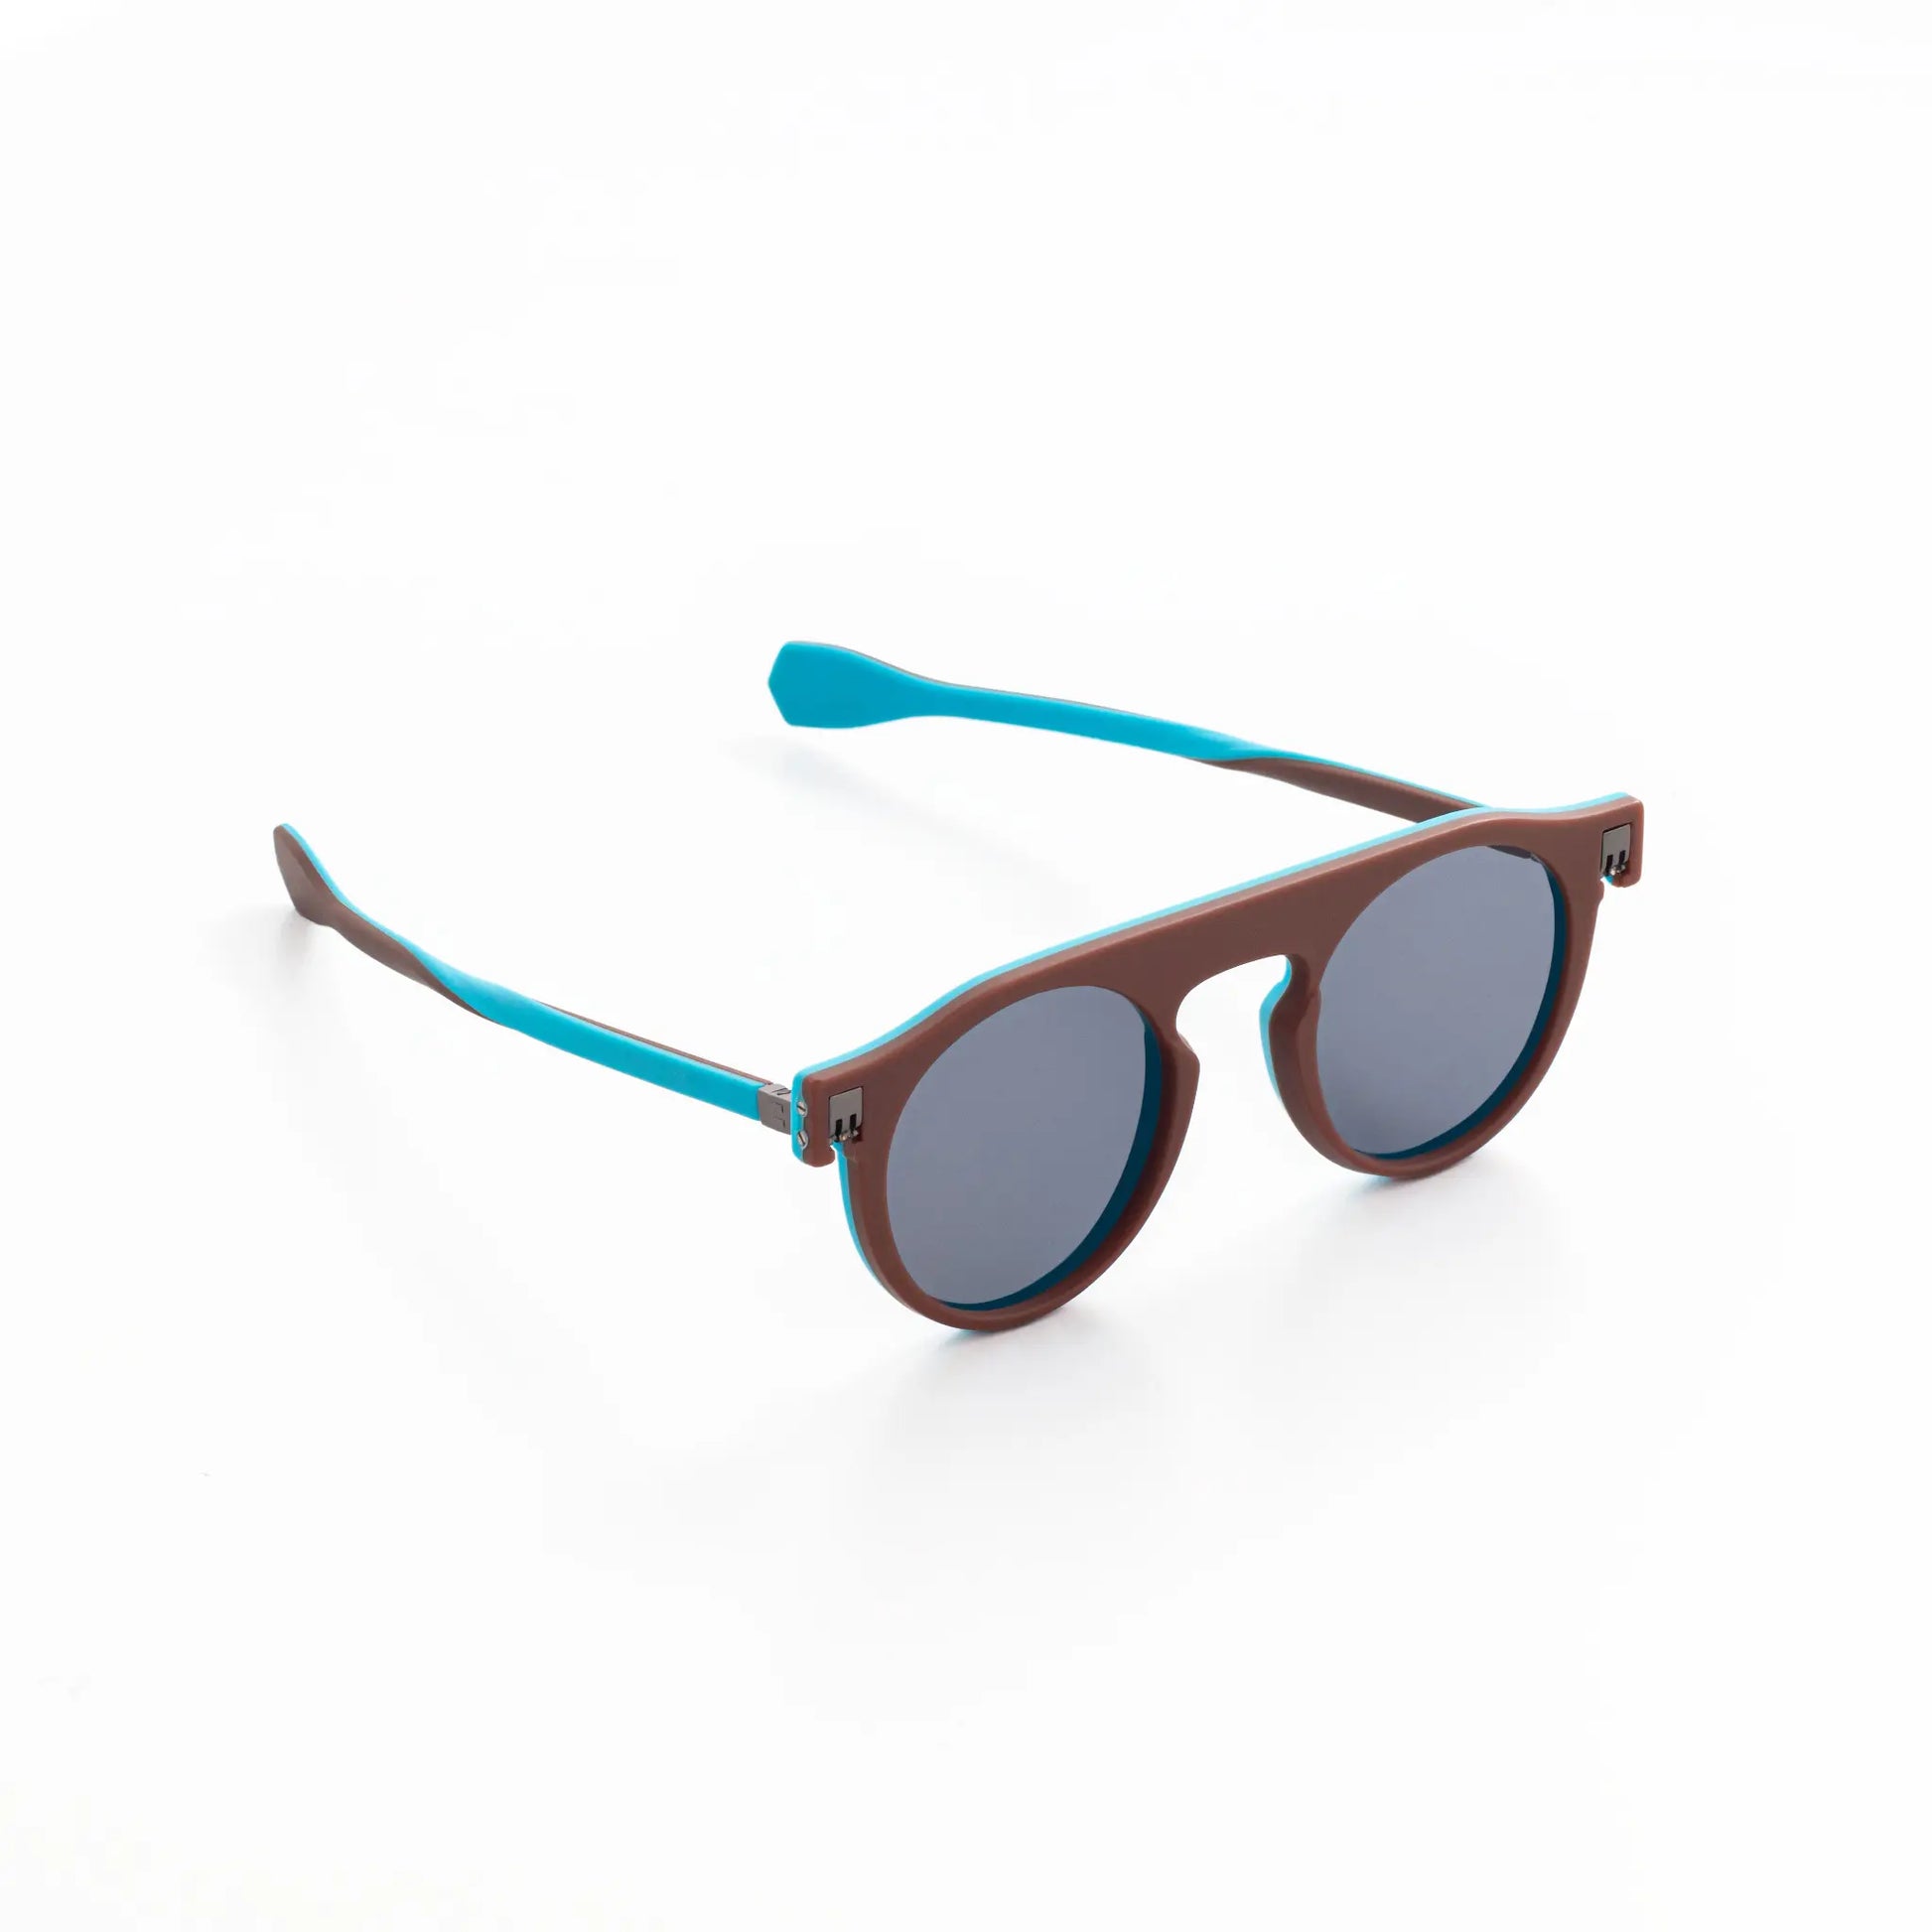 Reverso sunglasses brown & light blue reversible & ultra light side view 1